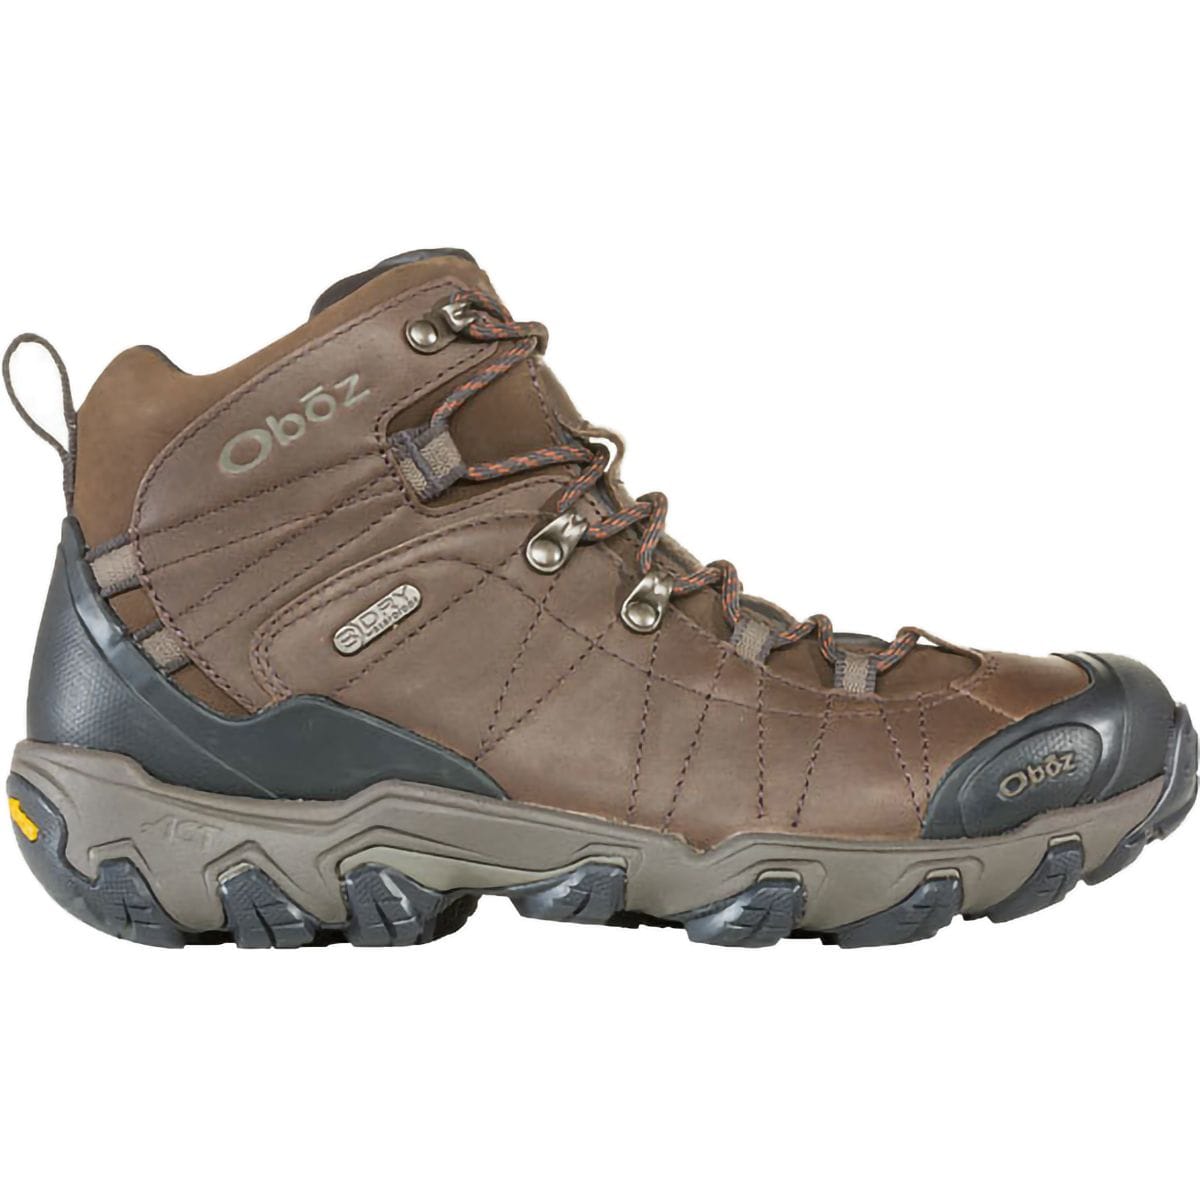 Oboz Bridger Premium Mid B-Dry Hiking Boot - Men's